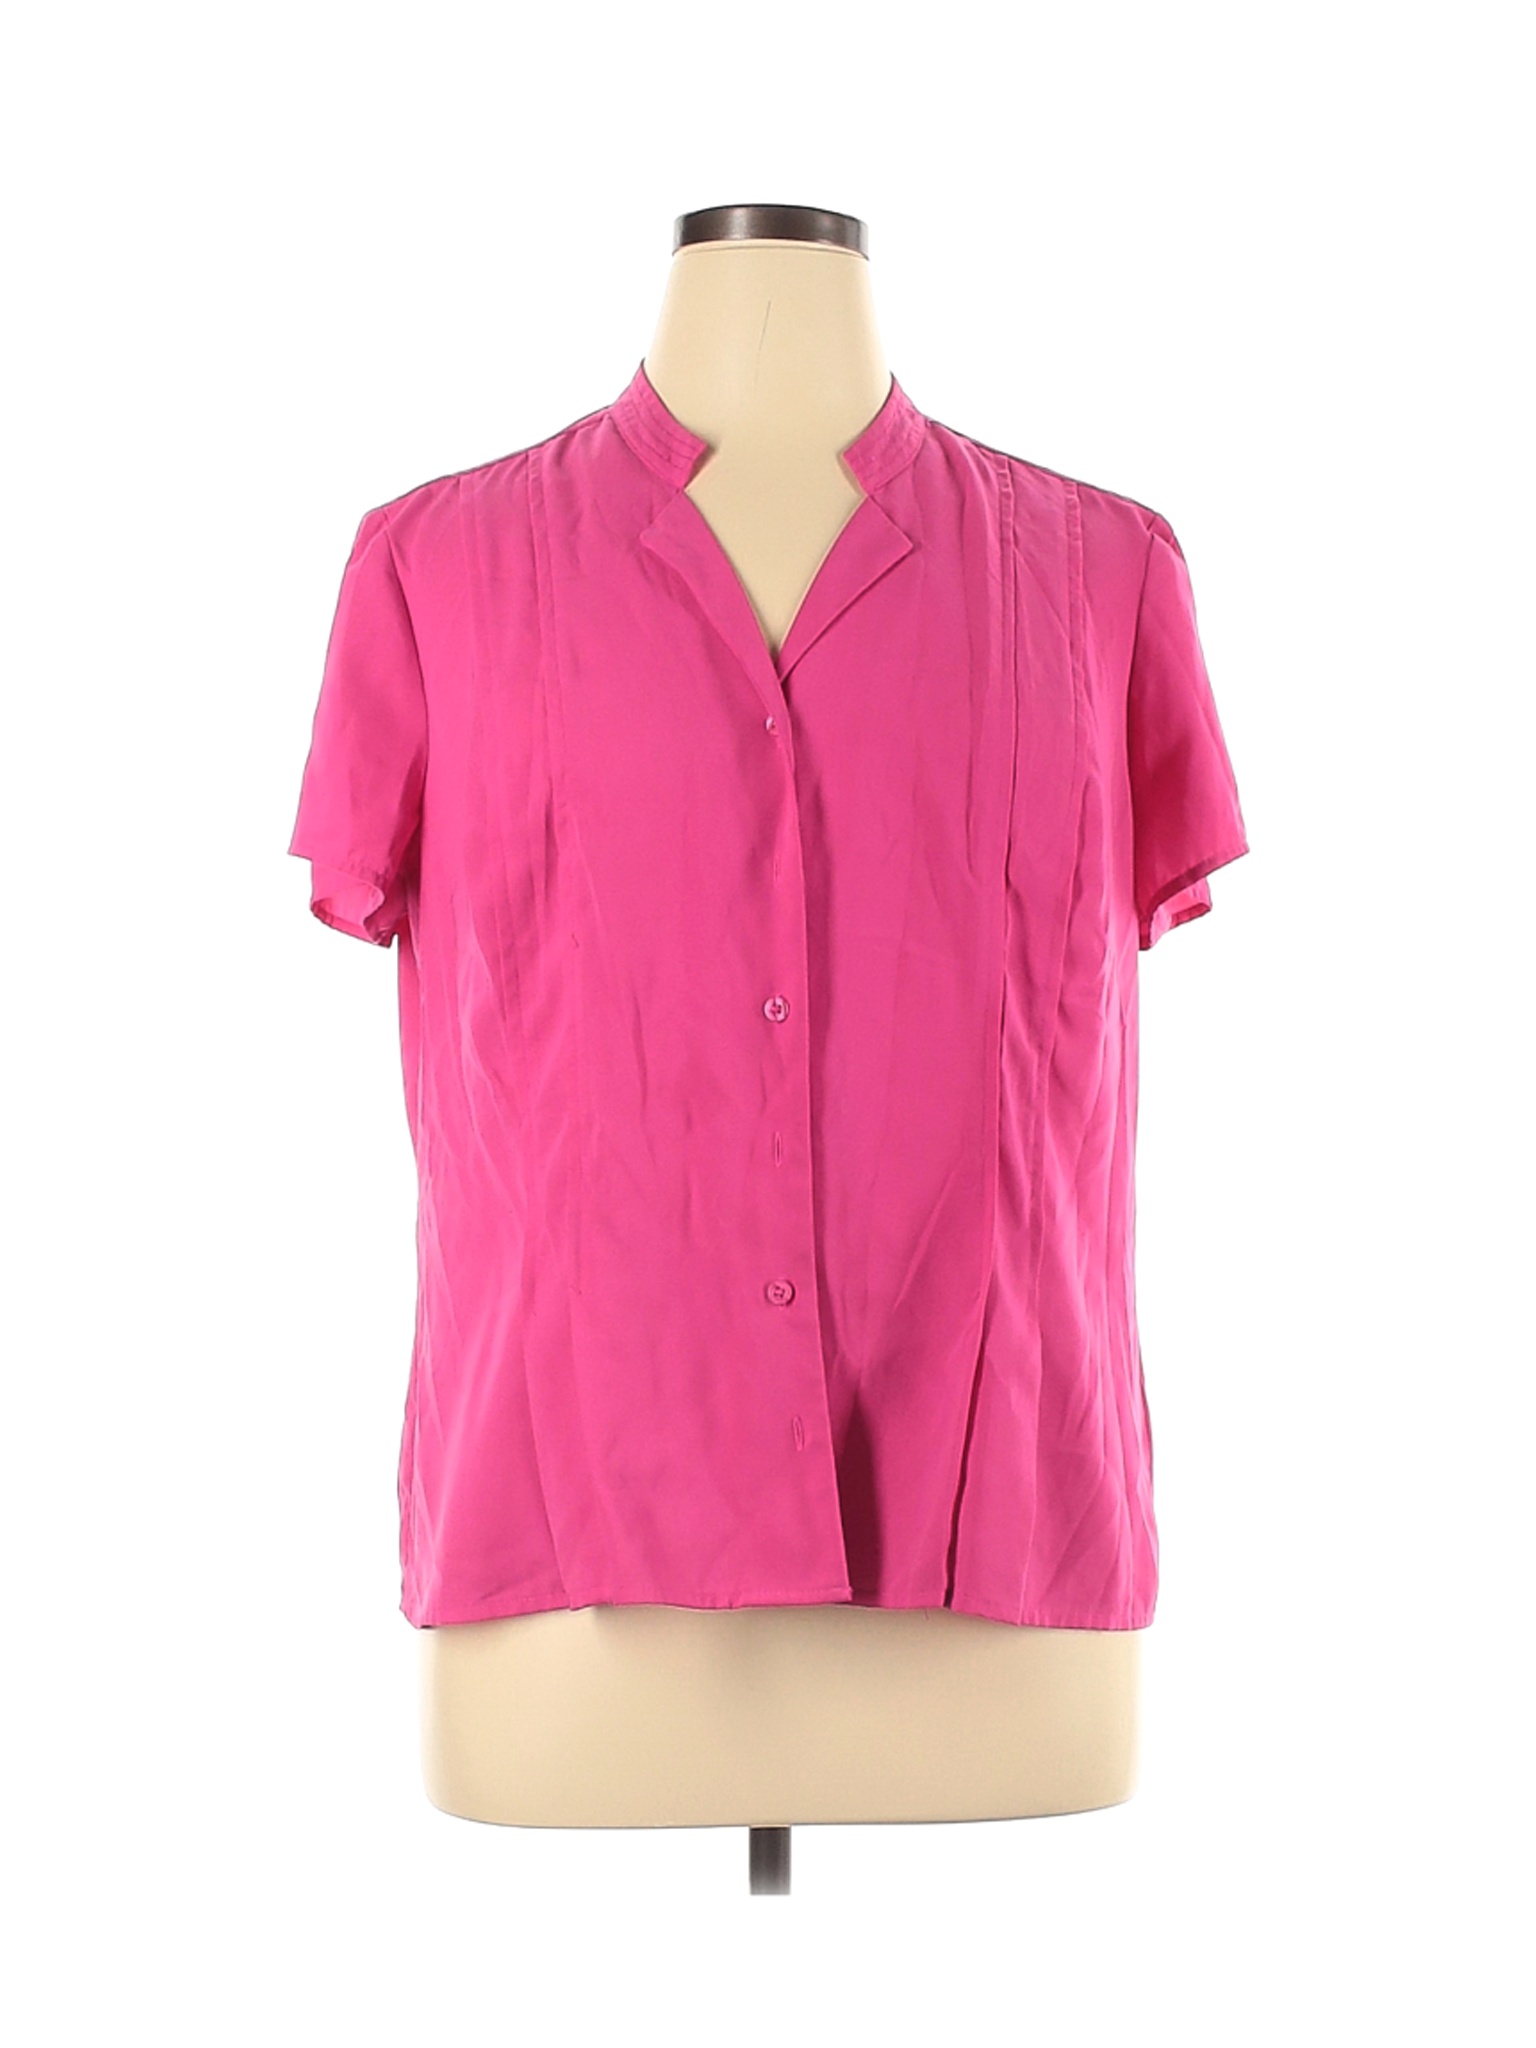 Dana Buchman Women Pink Short Sleeve Blouse XL | eBay